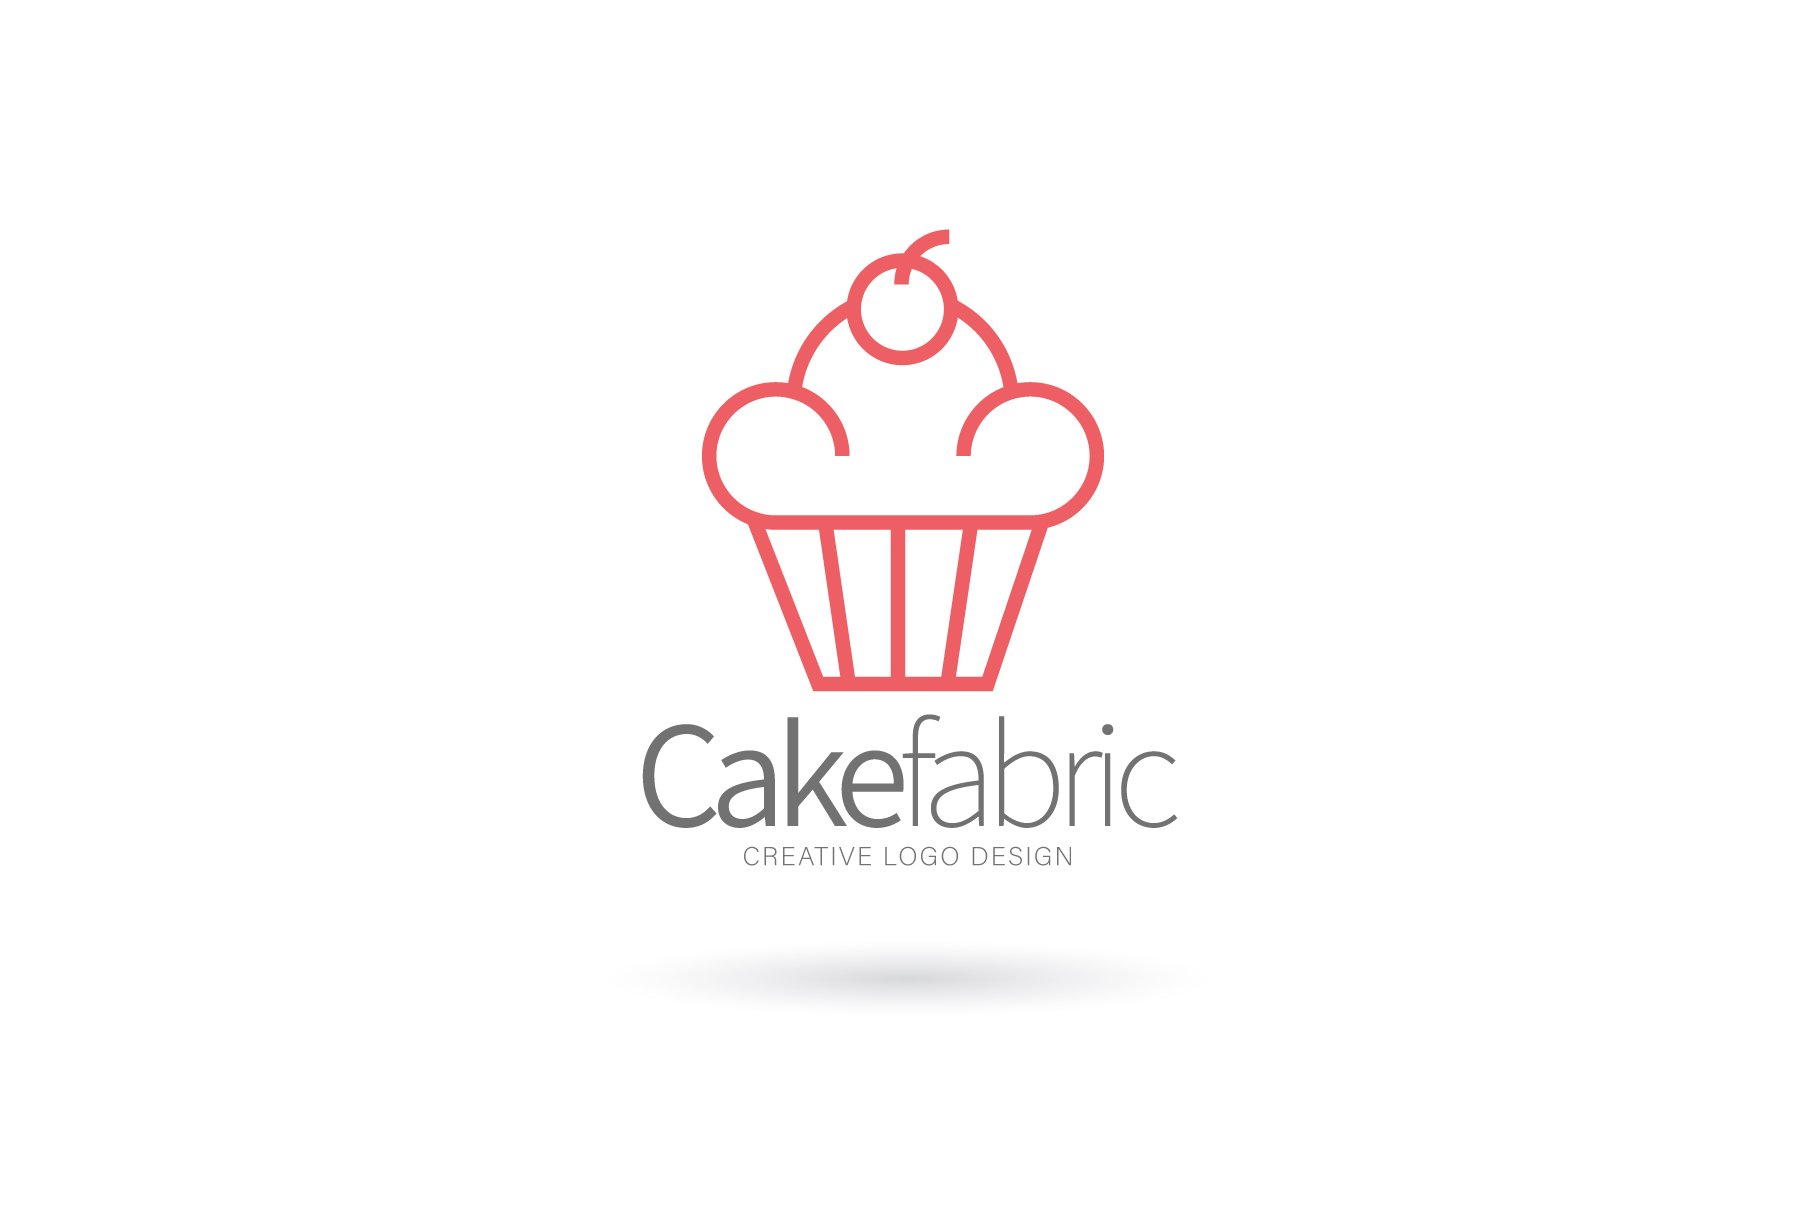 Cake Logos - 406+ Best Cake Logo Ideas. Free Cake Logo Maker. | 99designs